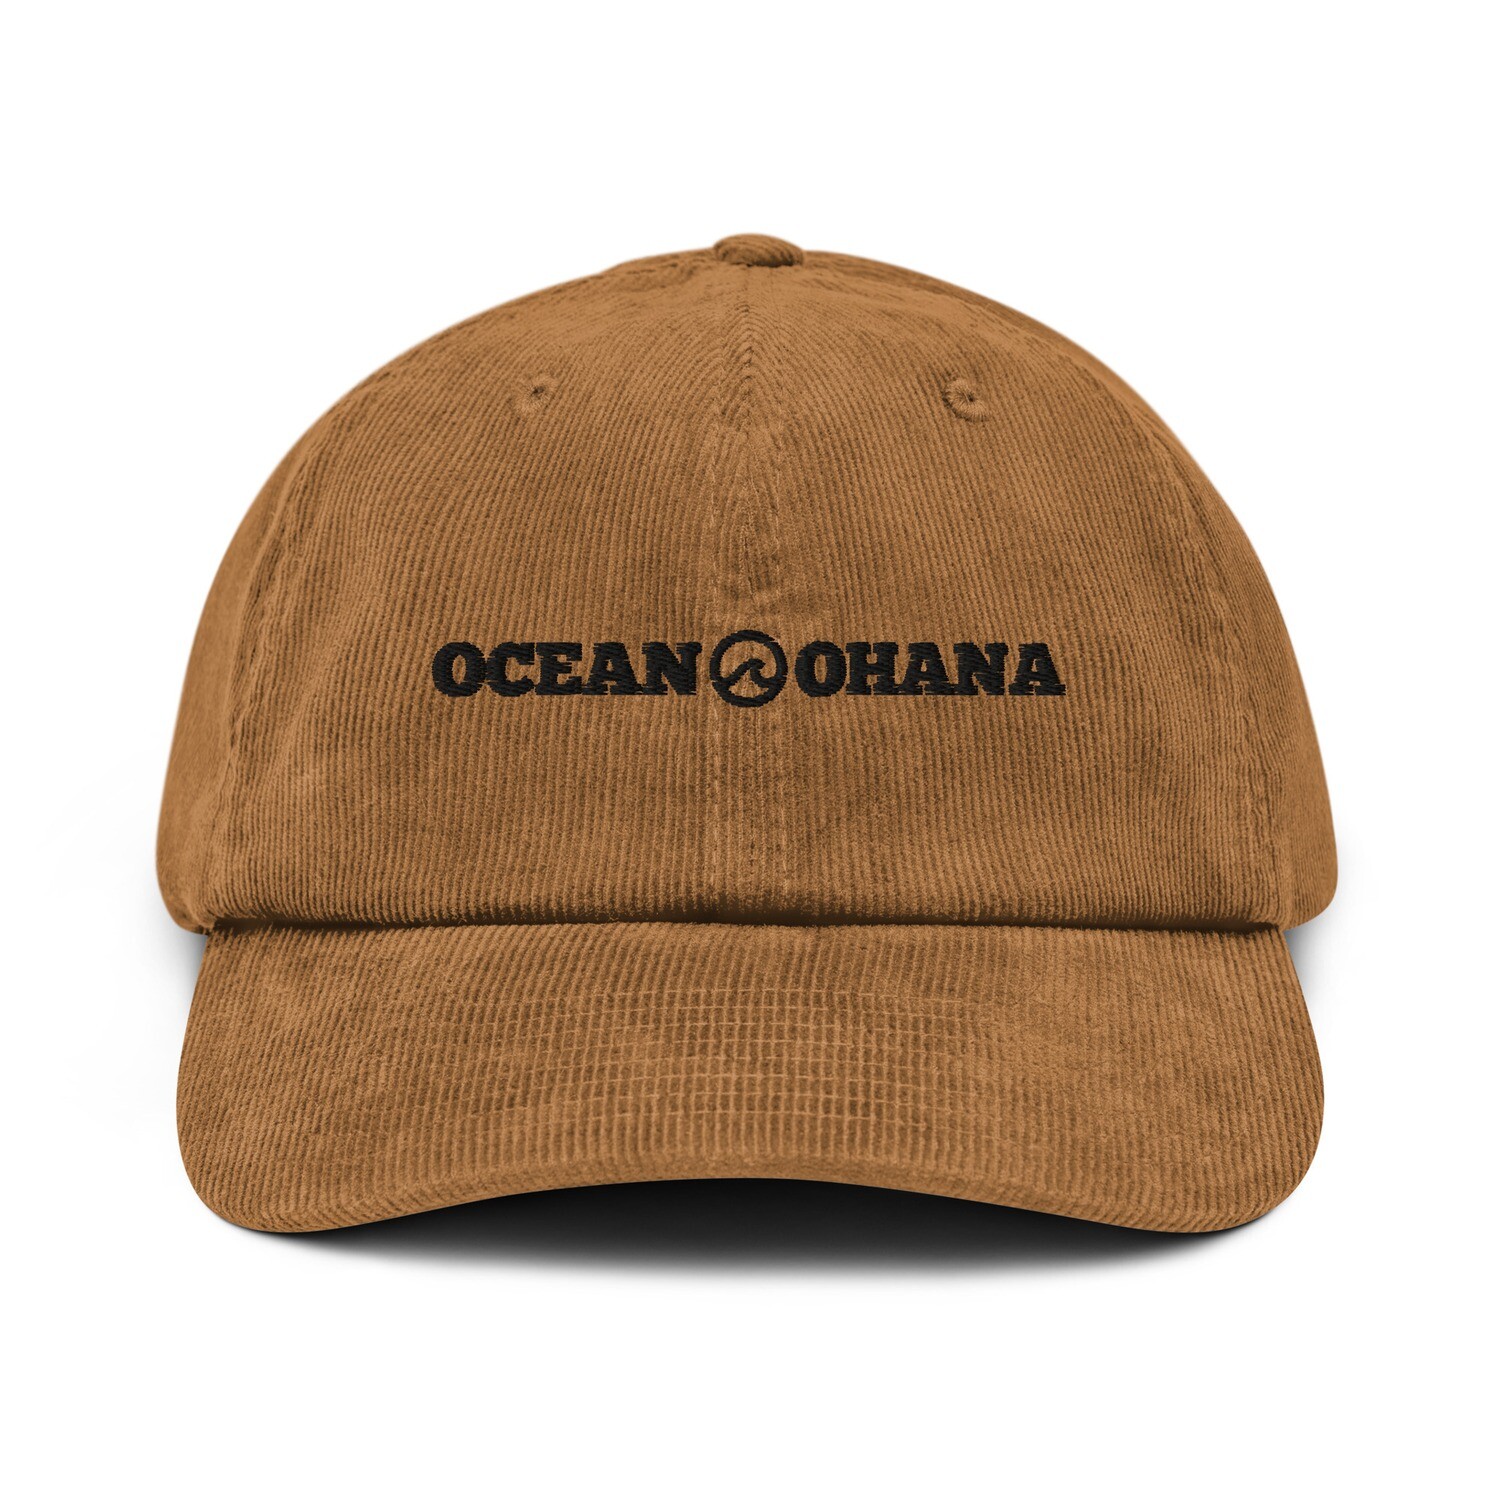 Ocean Ohana Corduroy hat